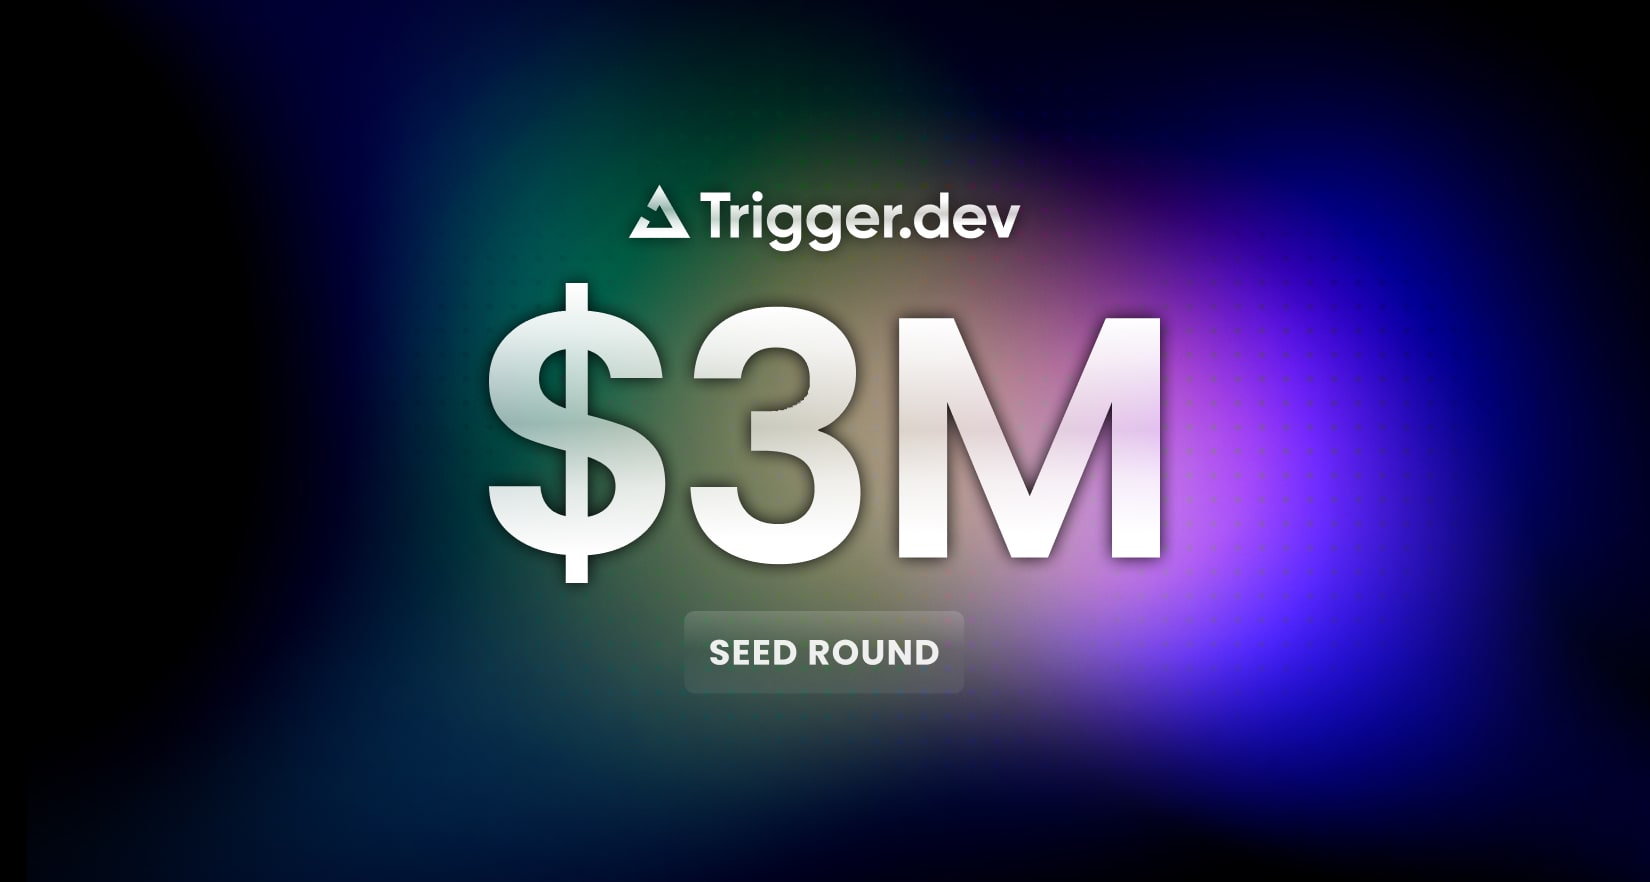 Trigger.dev raises $3M